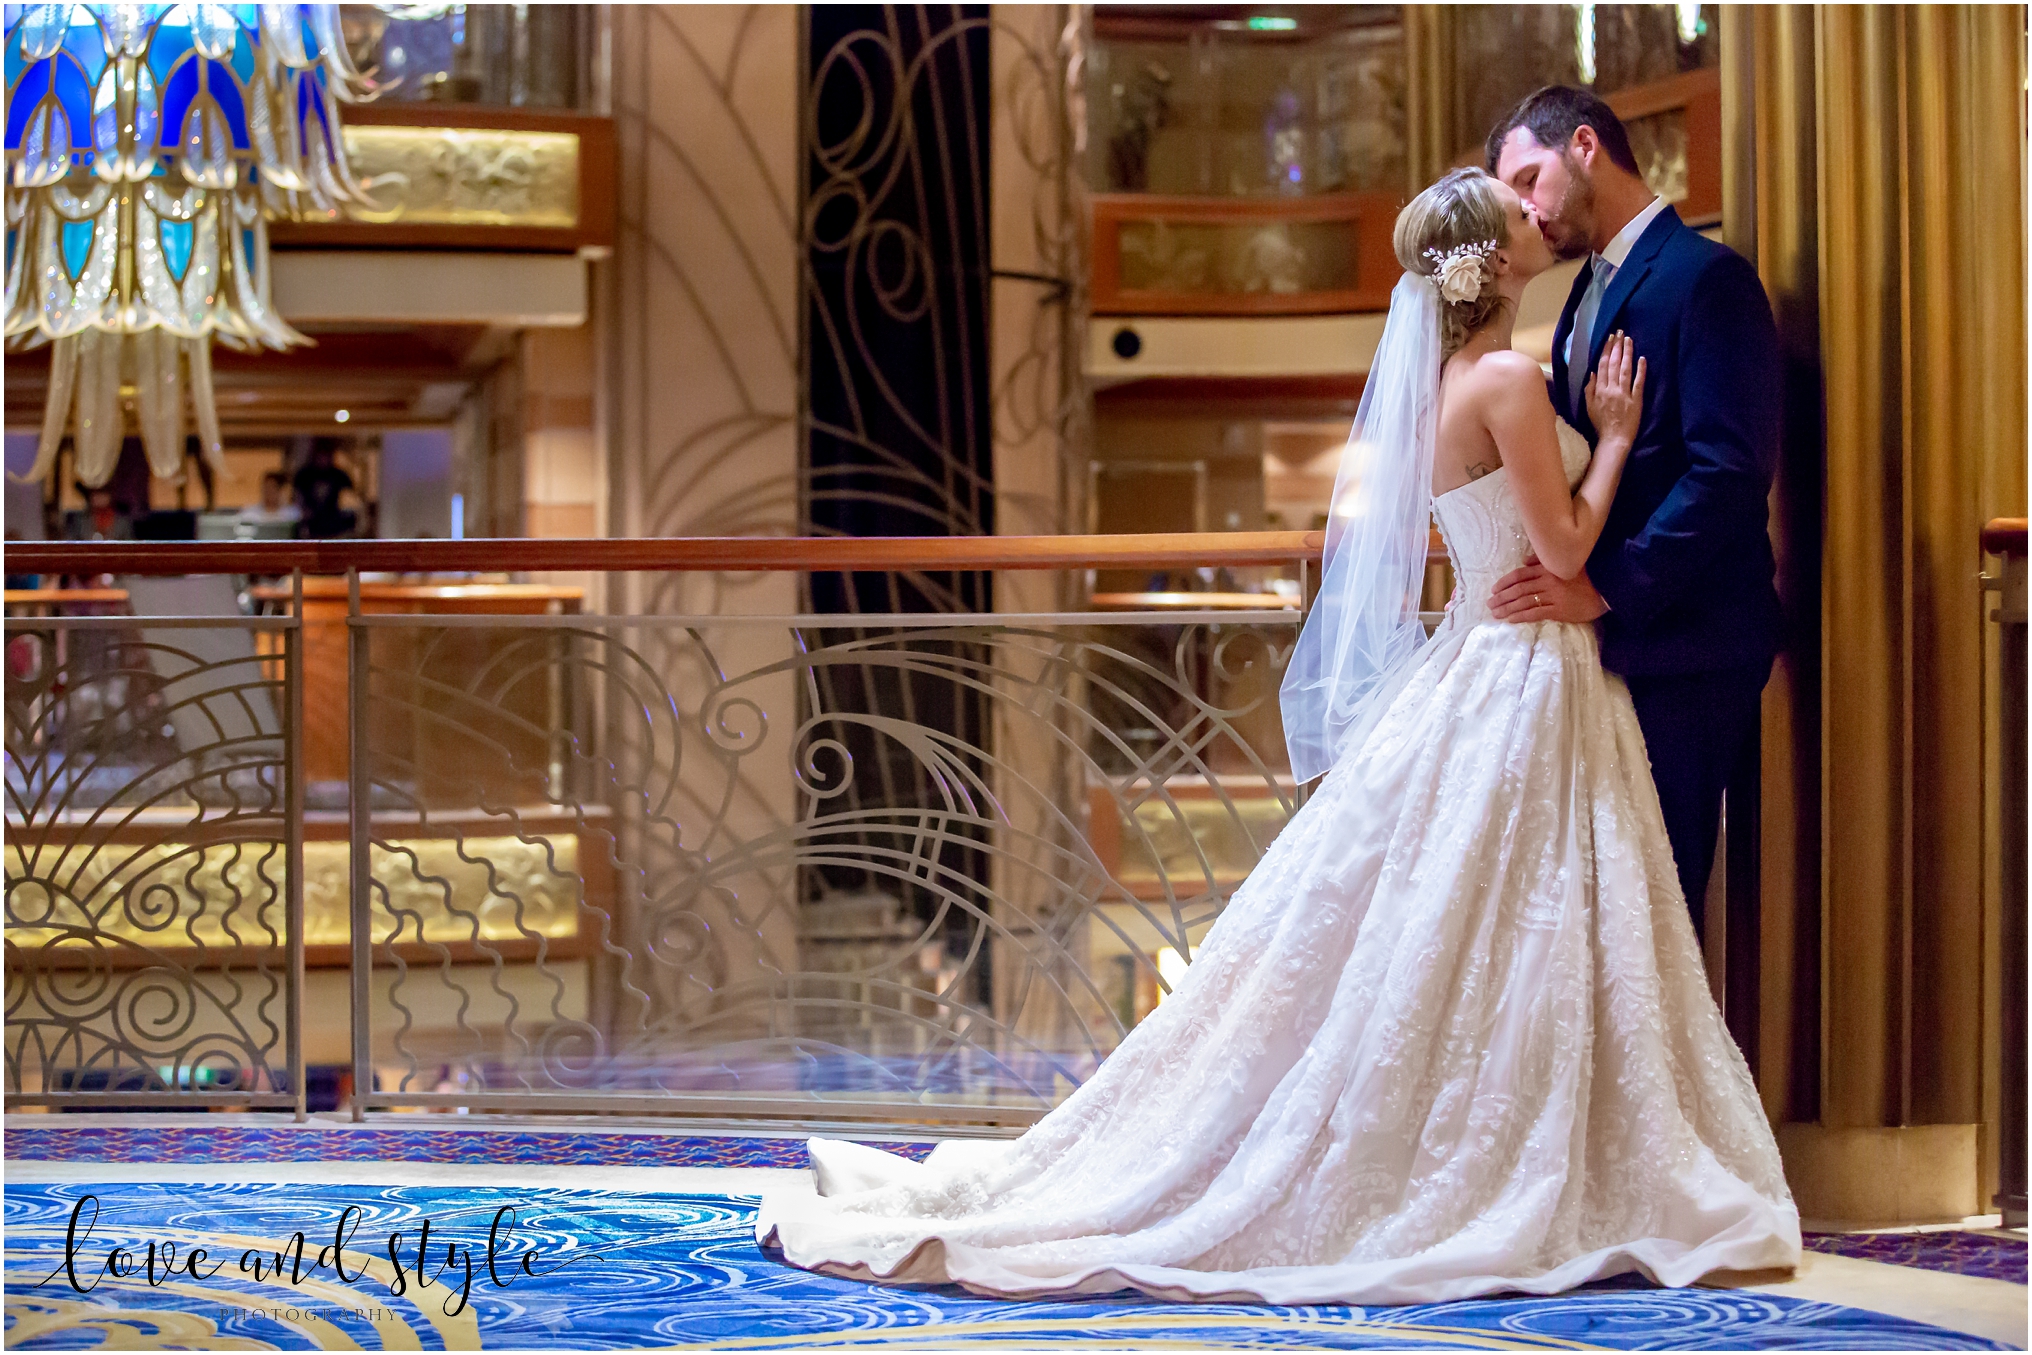 Disney Dream Cruise Wedding Photography, bride and groom portrait in the ship's atrium